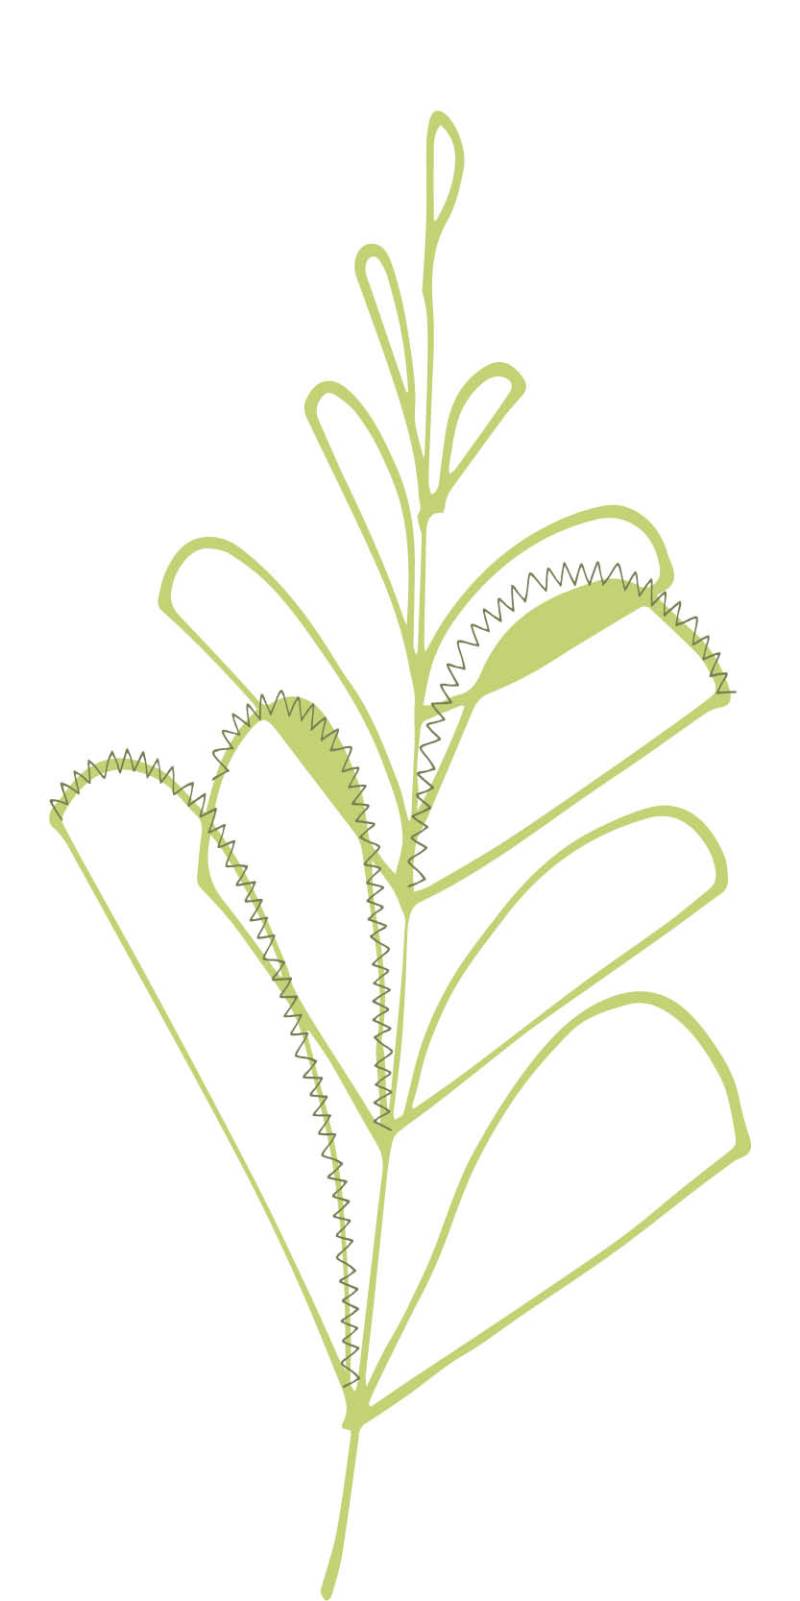 illustrative outline of a plant